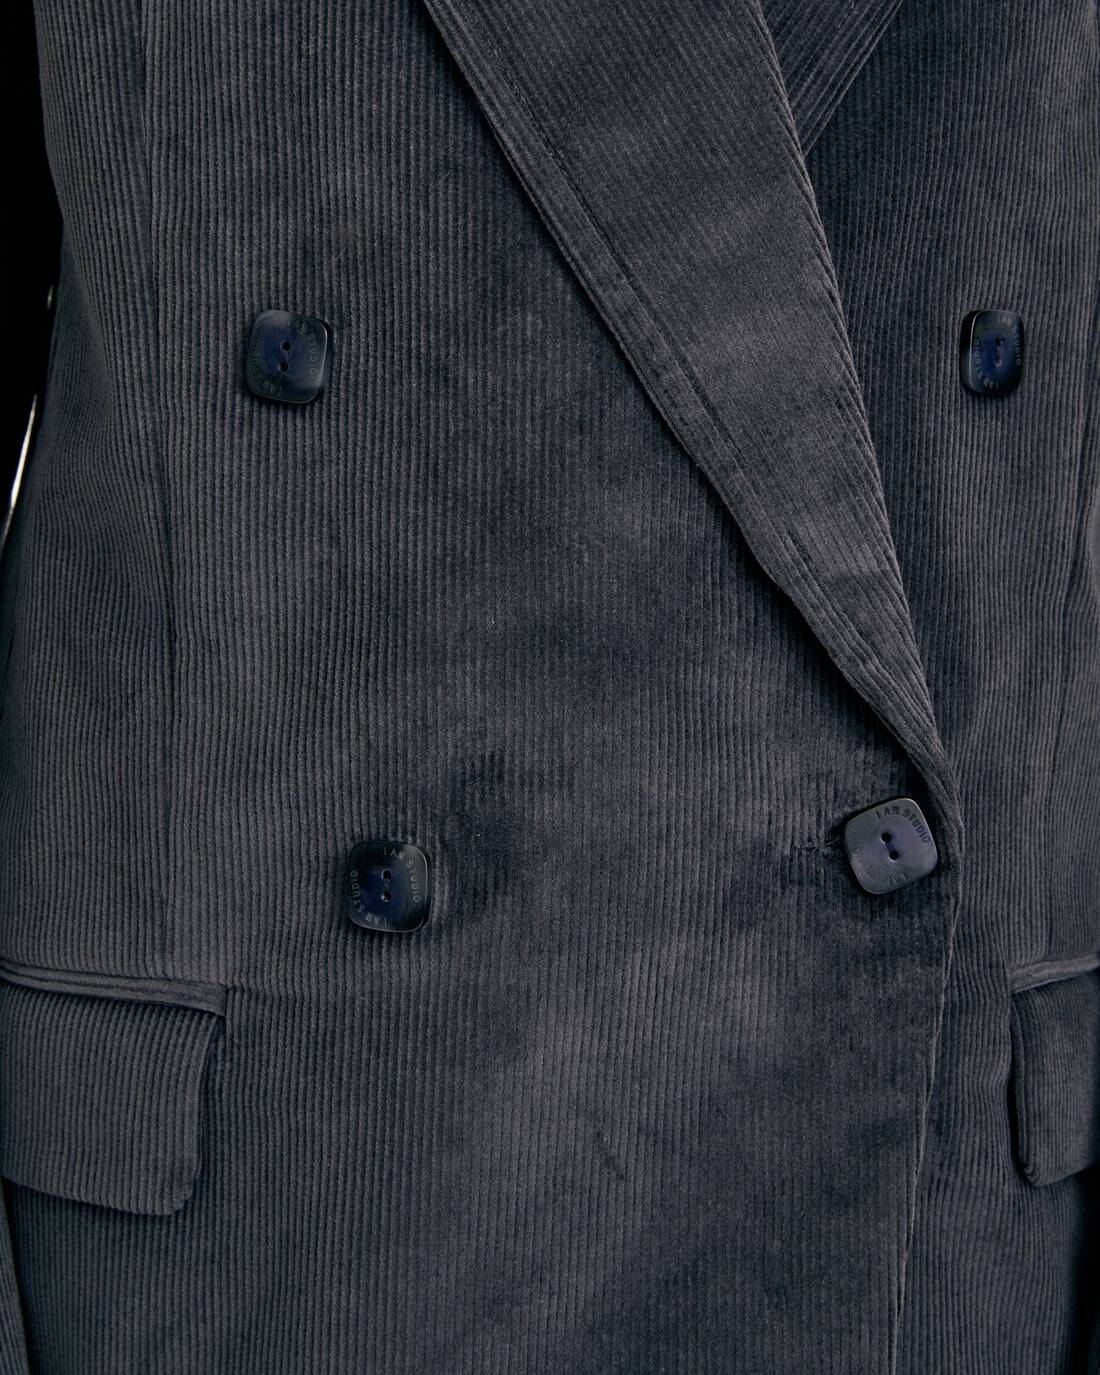 Double-breasted corduroy jacket